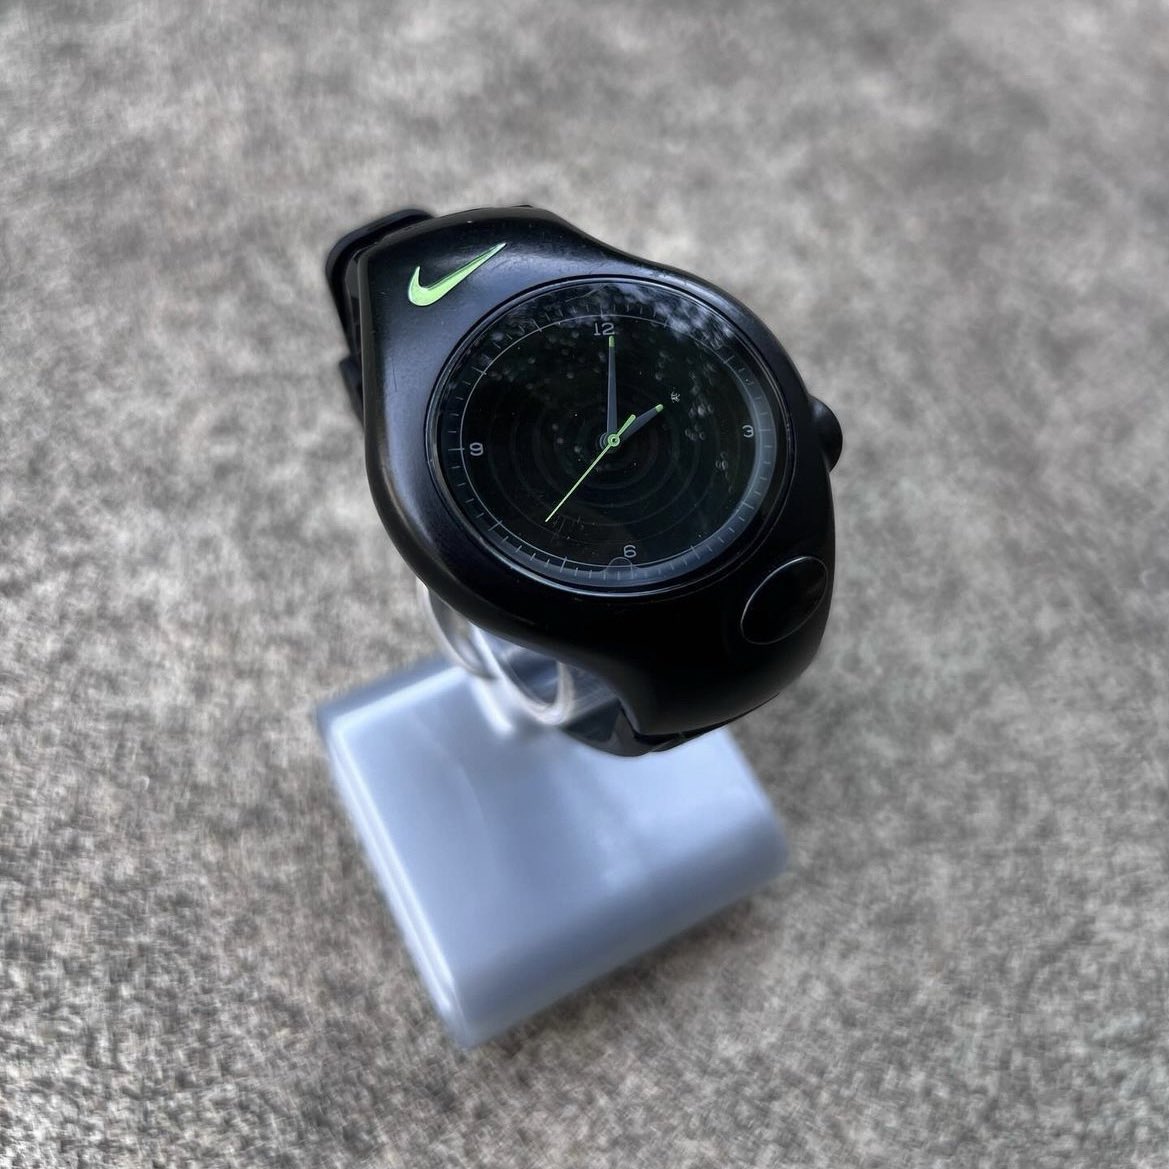 Nike Triax “Black Volt” watch